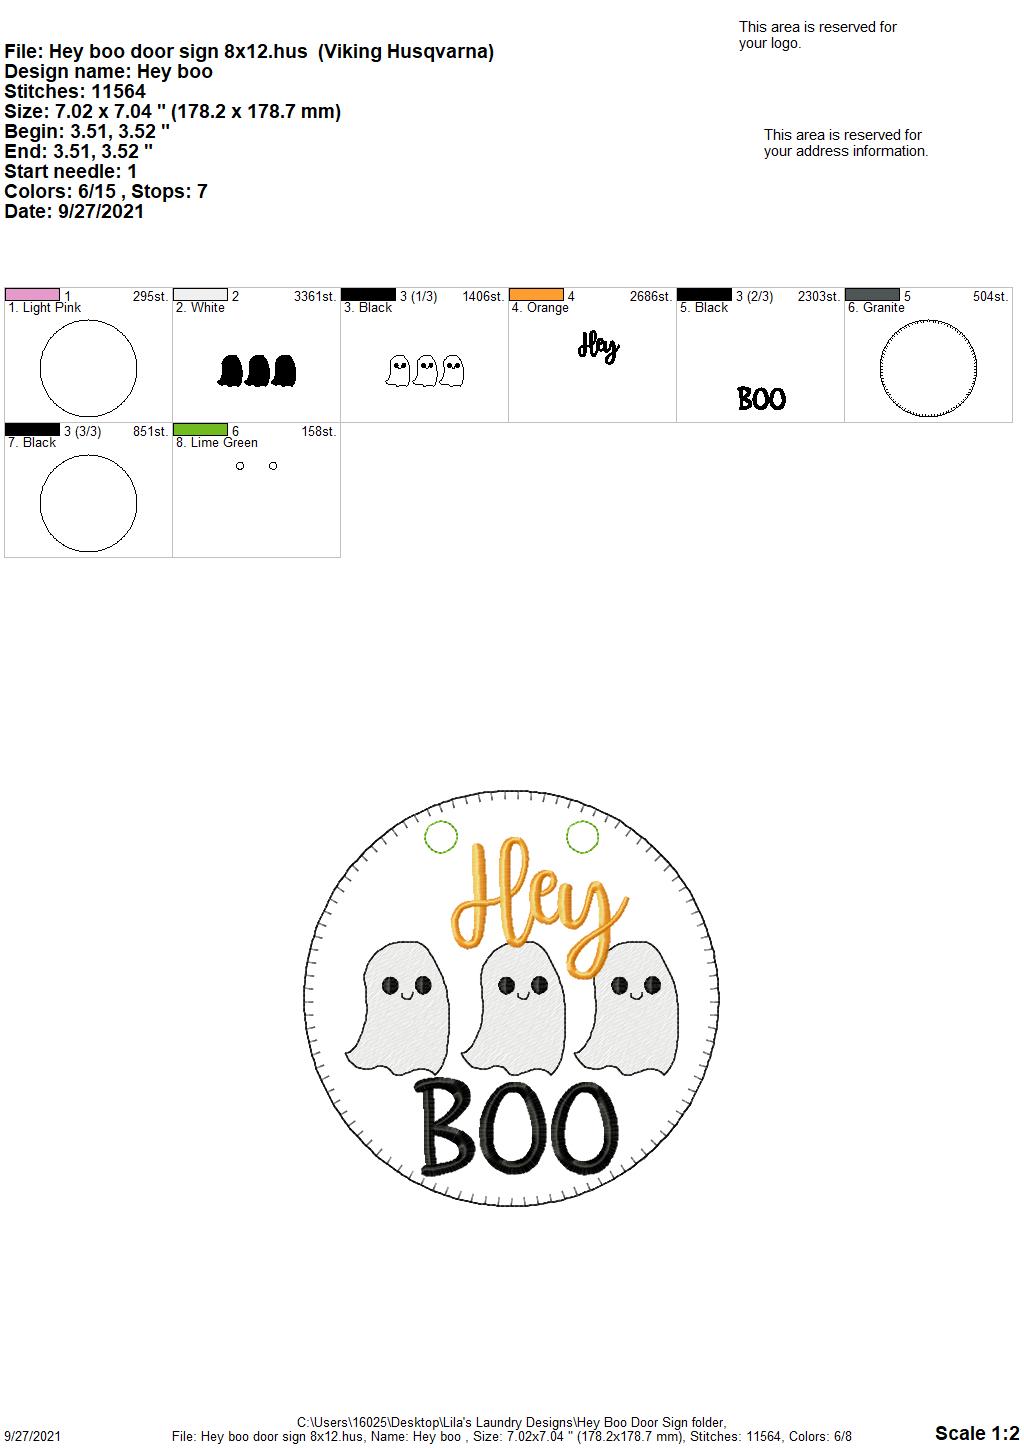 Hey Boo Sketch Door Sign - 3 sizes - Digital Embroidery Design